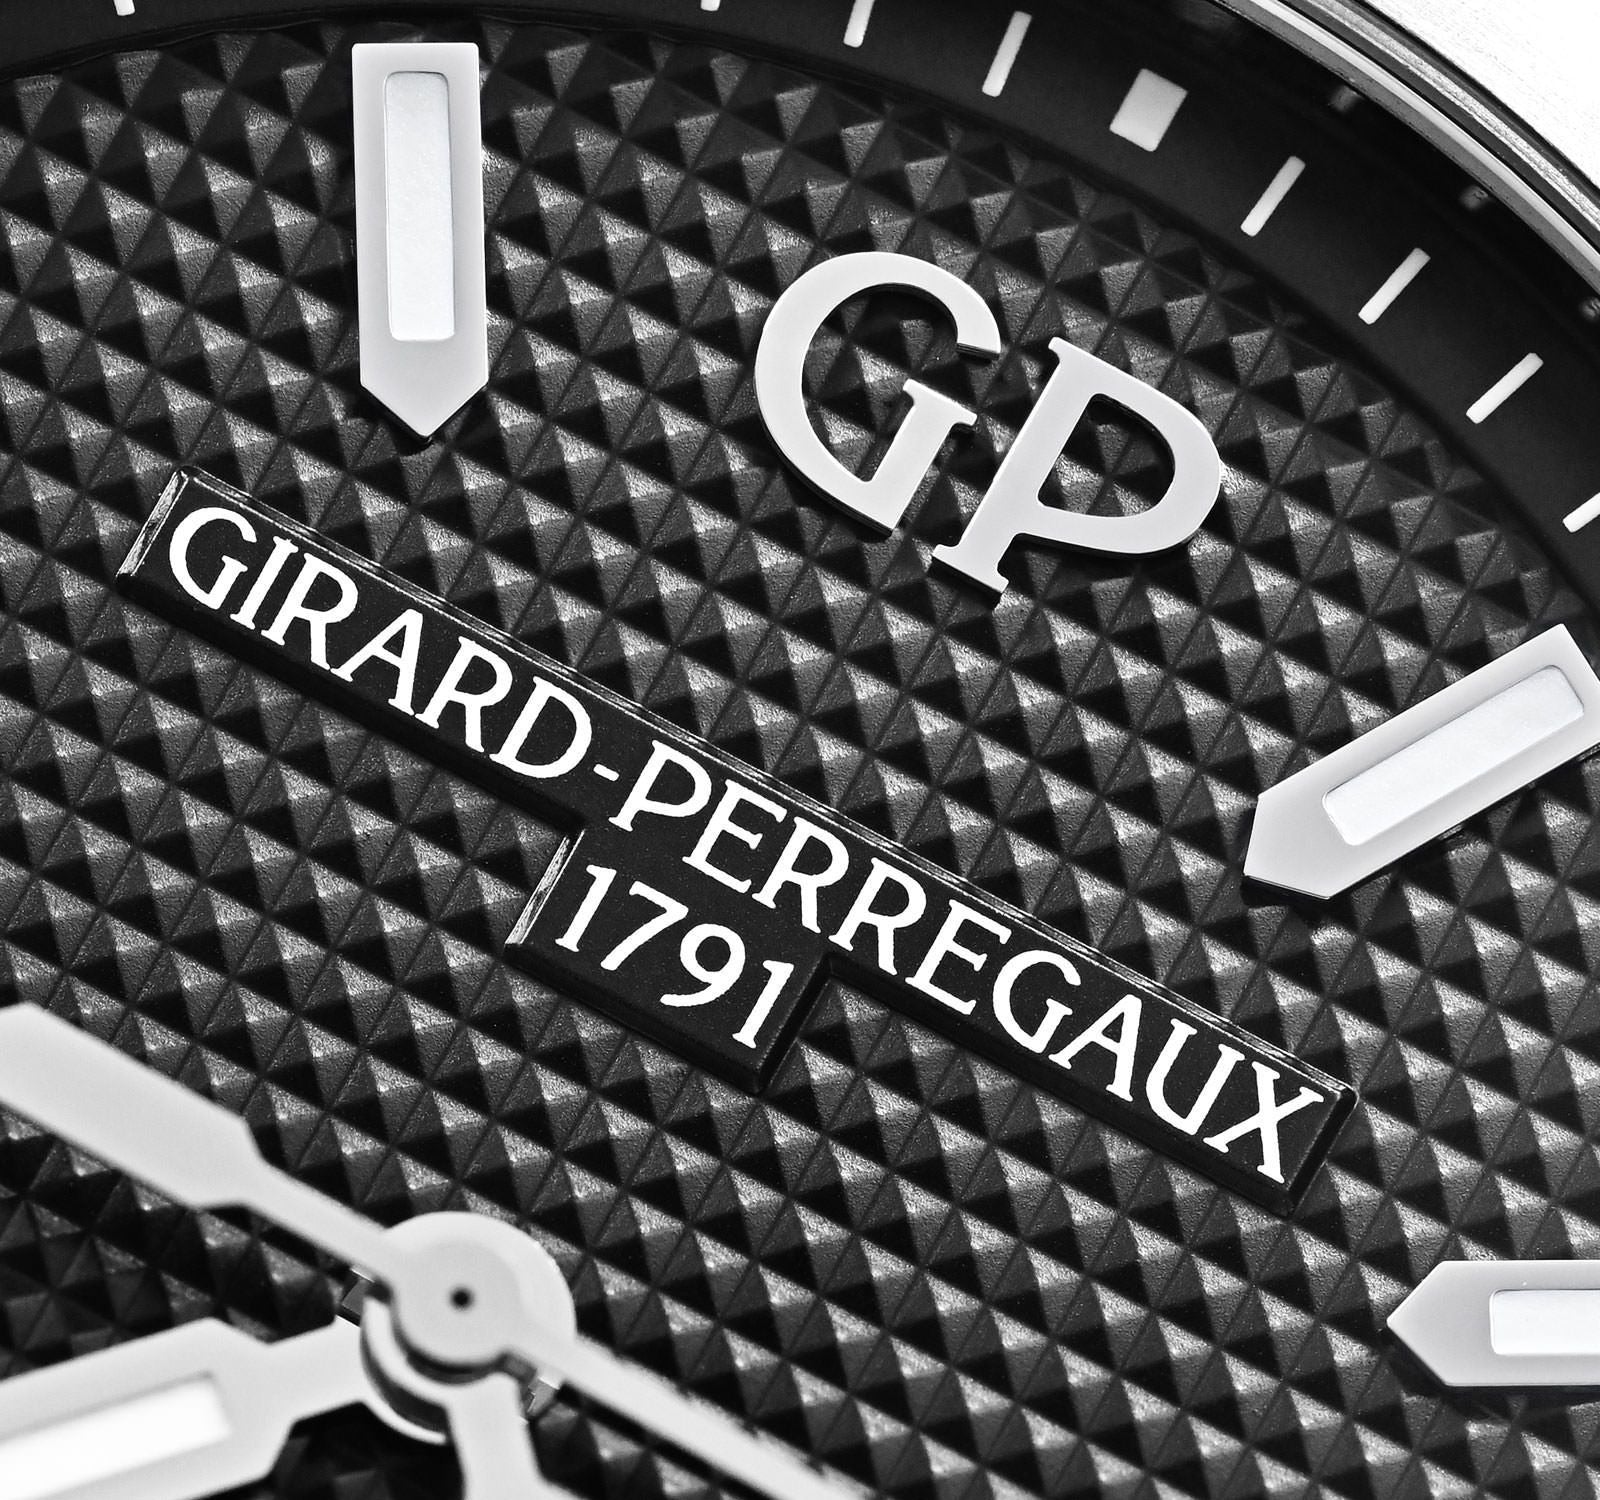 Pre Owned Girard-Perregaux Laureato Men Watch 81010-11-634-11A-G22A